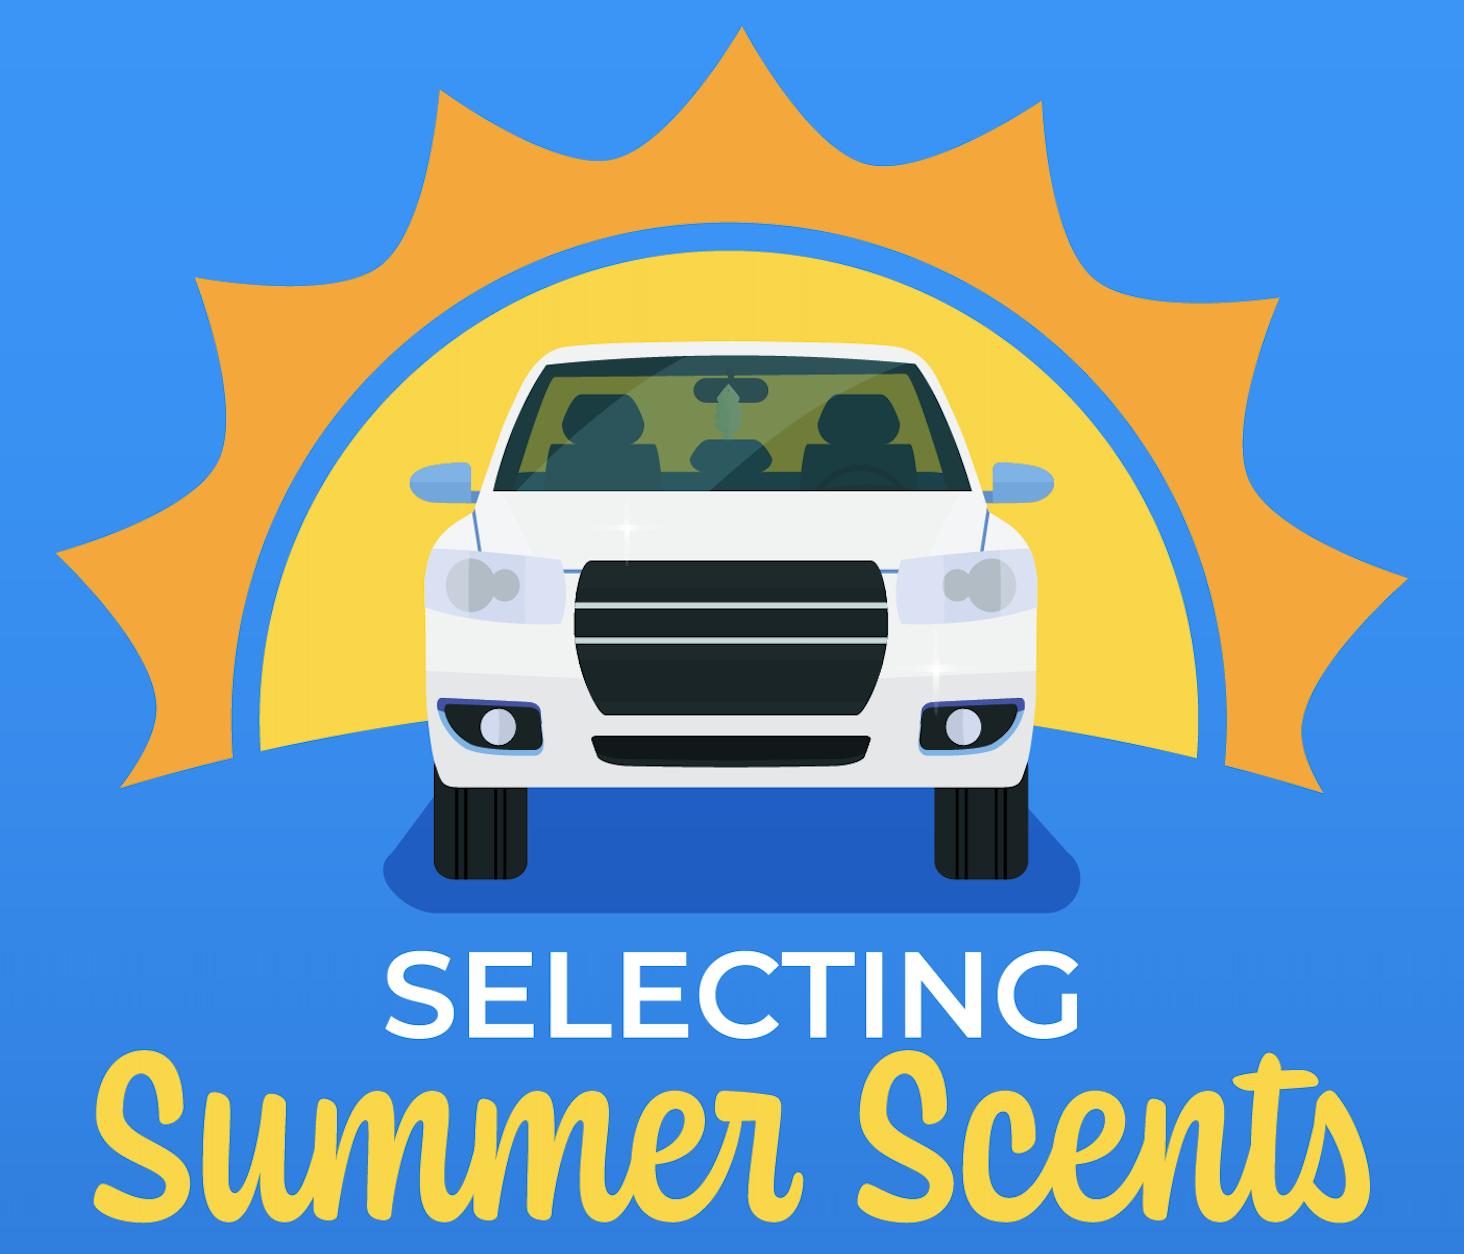 Selecting Summer Scents for Car Wash Air Freshener Vending